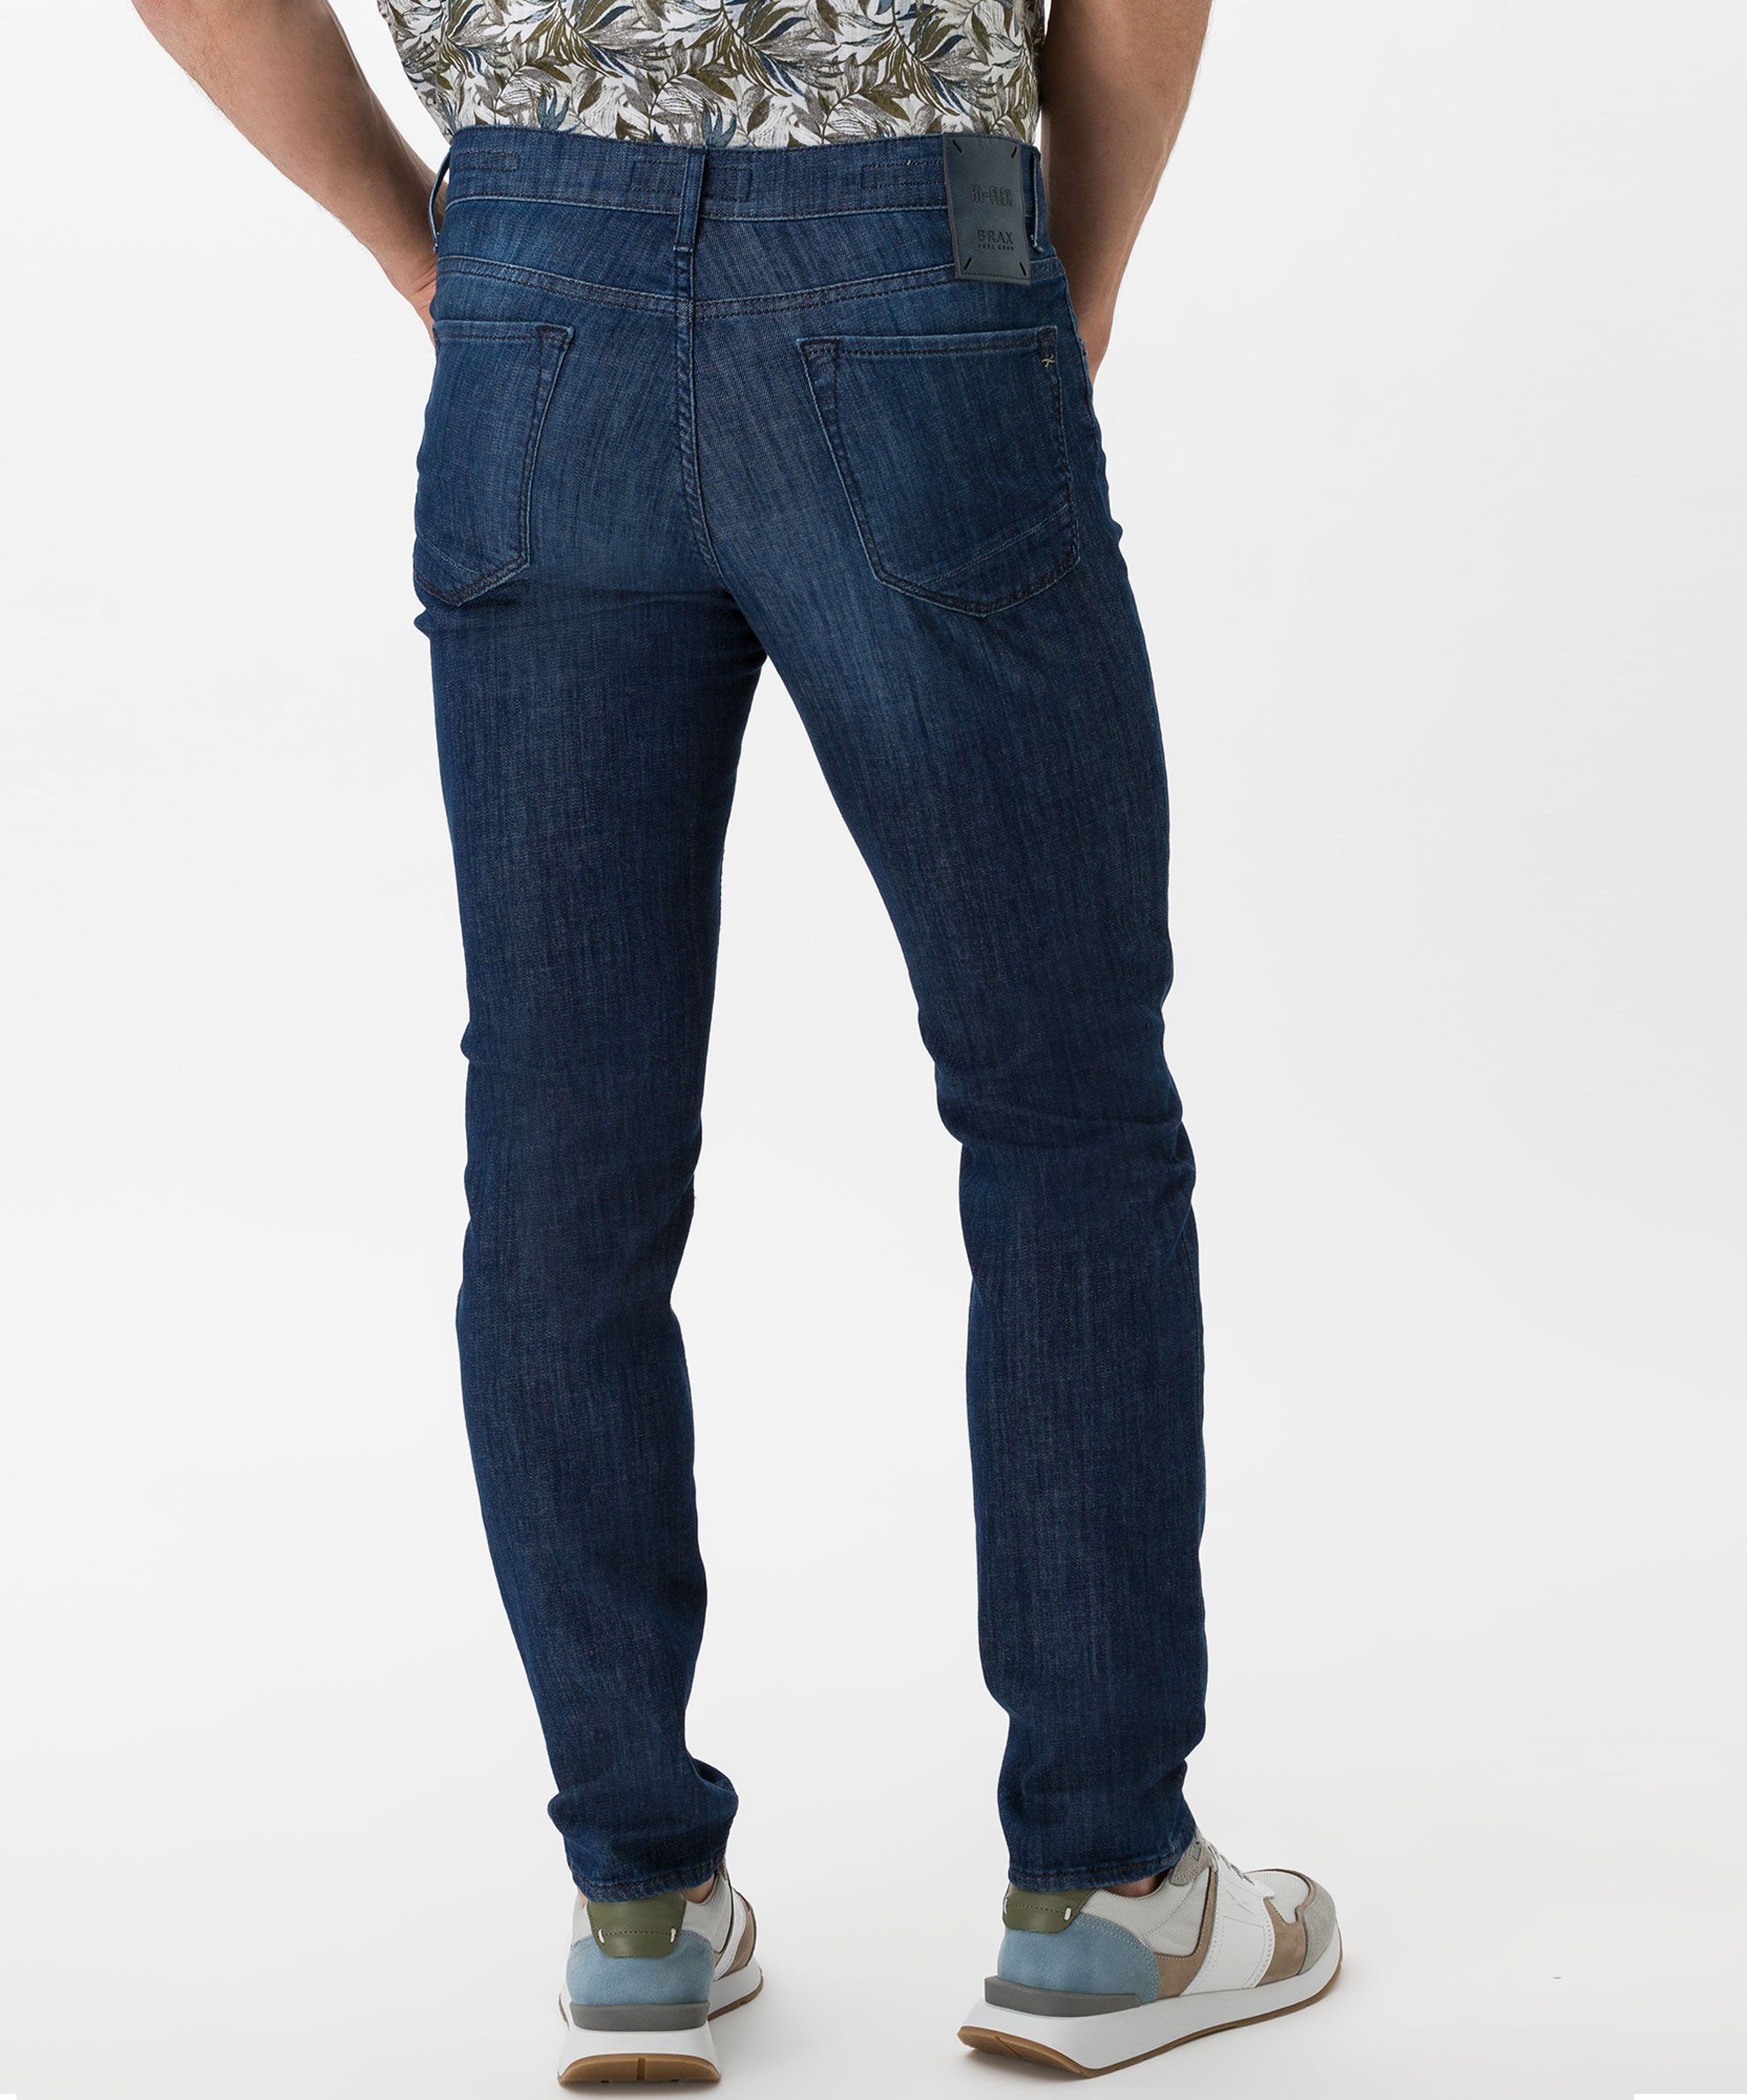 Brax 5-Pocket-Jeans Style navy Sommerdenim Hi-Flex blue used CHUCK softer LIGHT